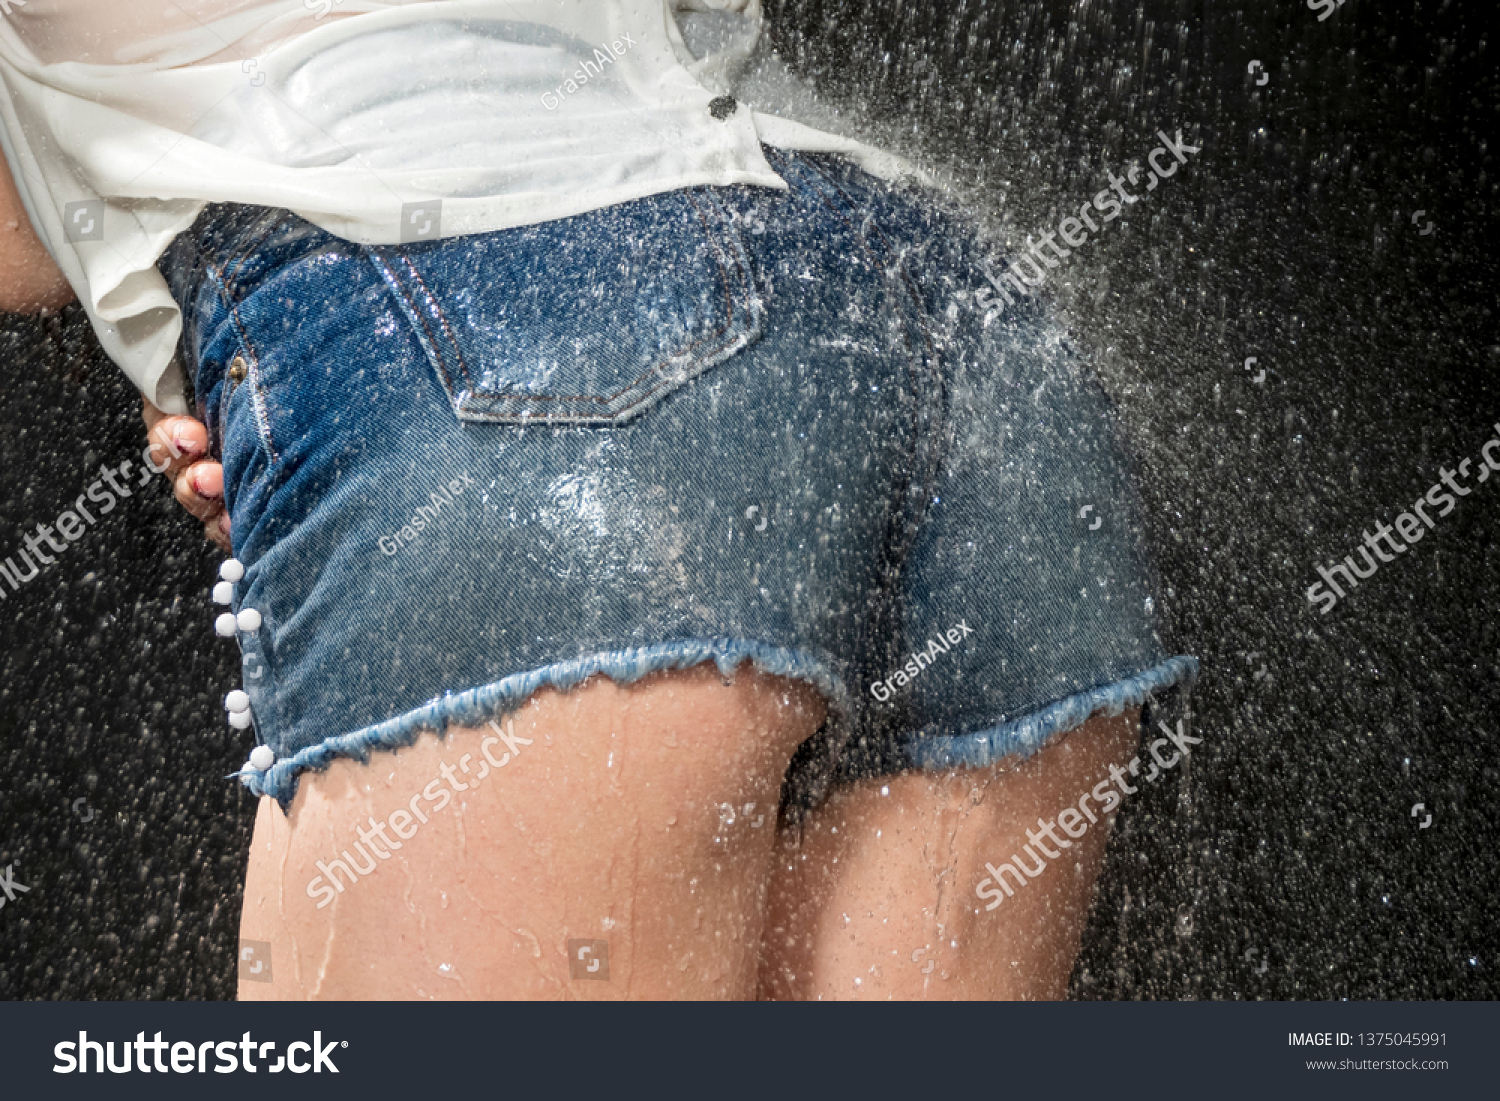 Wet Bubble Butt